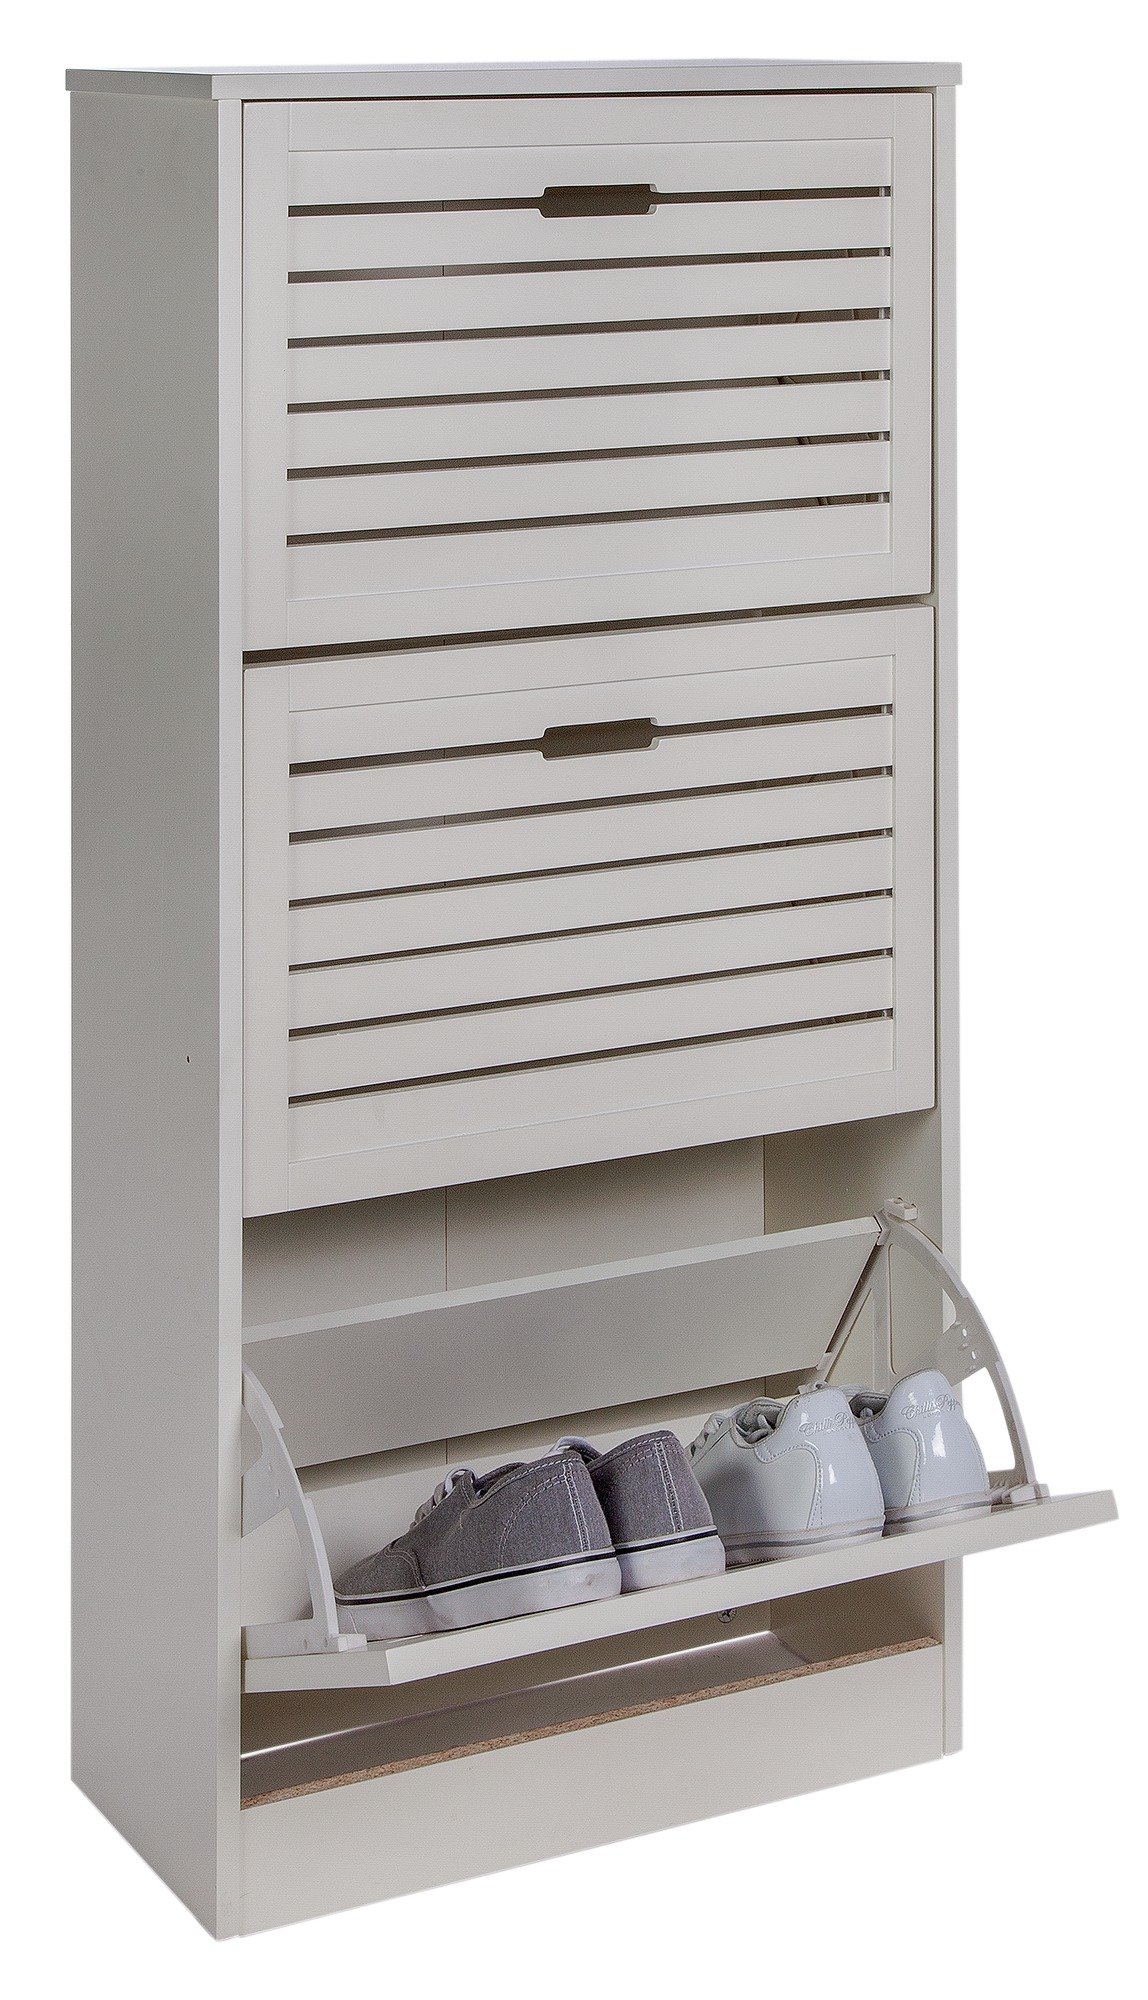 Argos Home Hereford Shoe Storage Cabinet - White